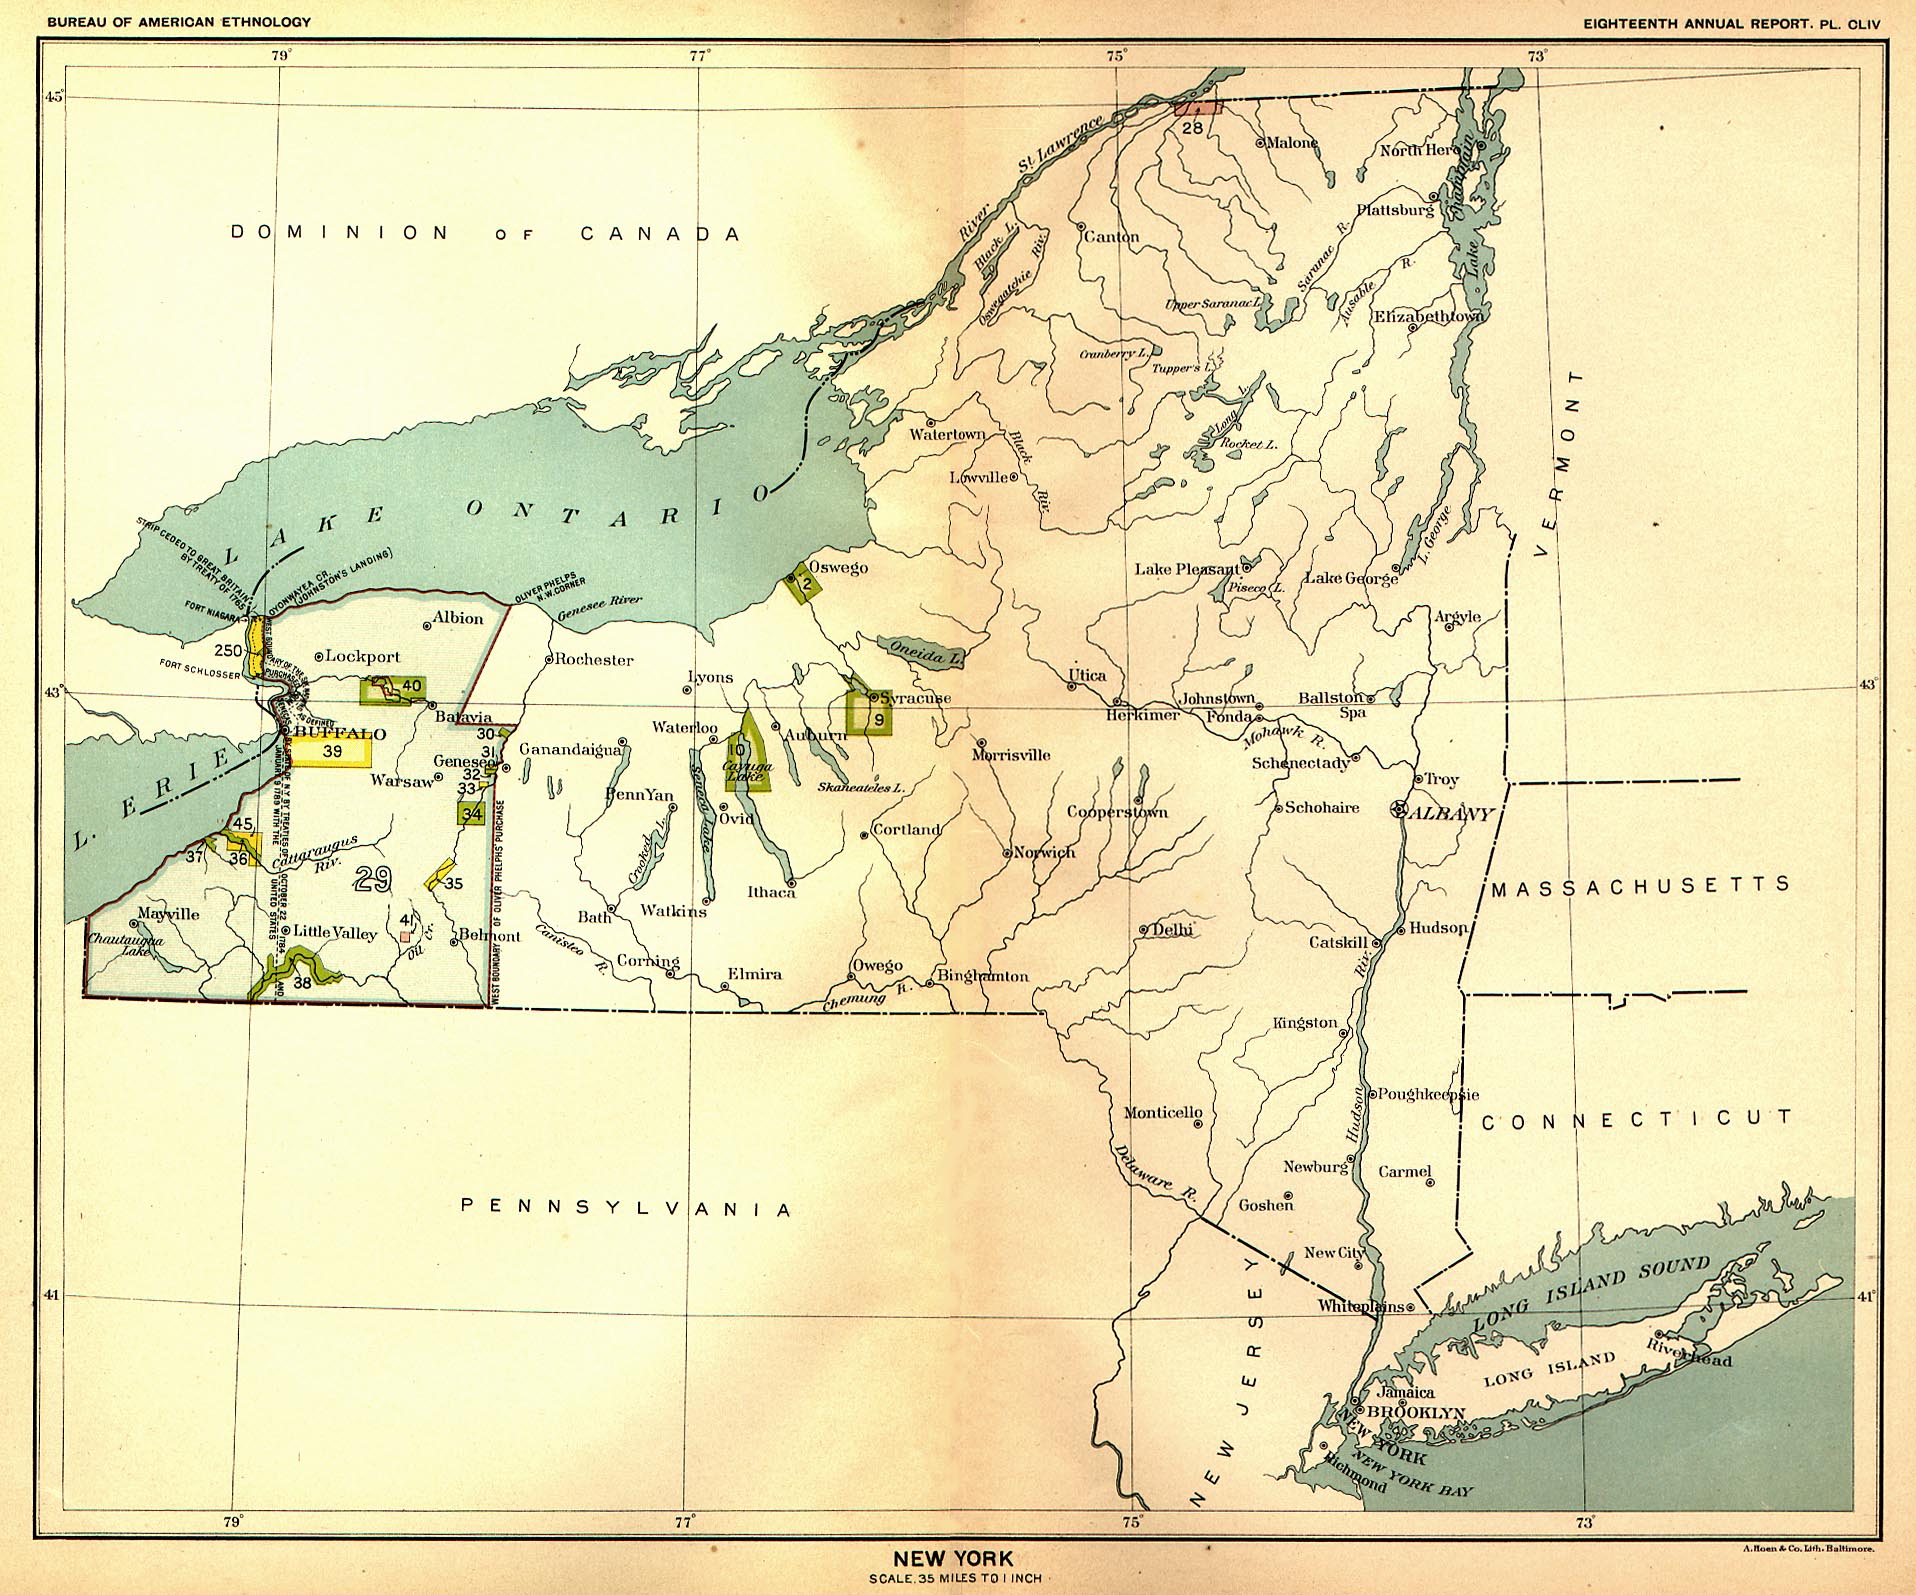 New York, Map 
47